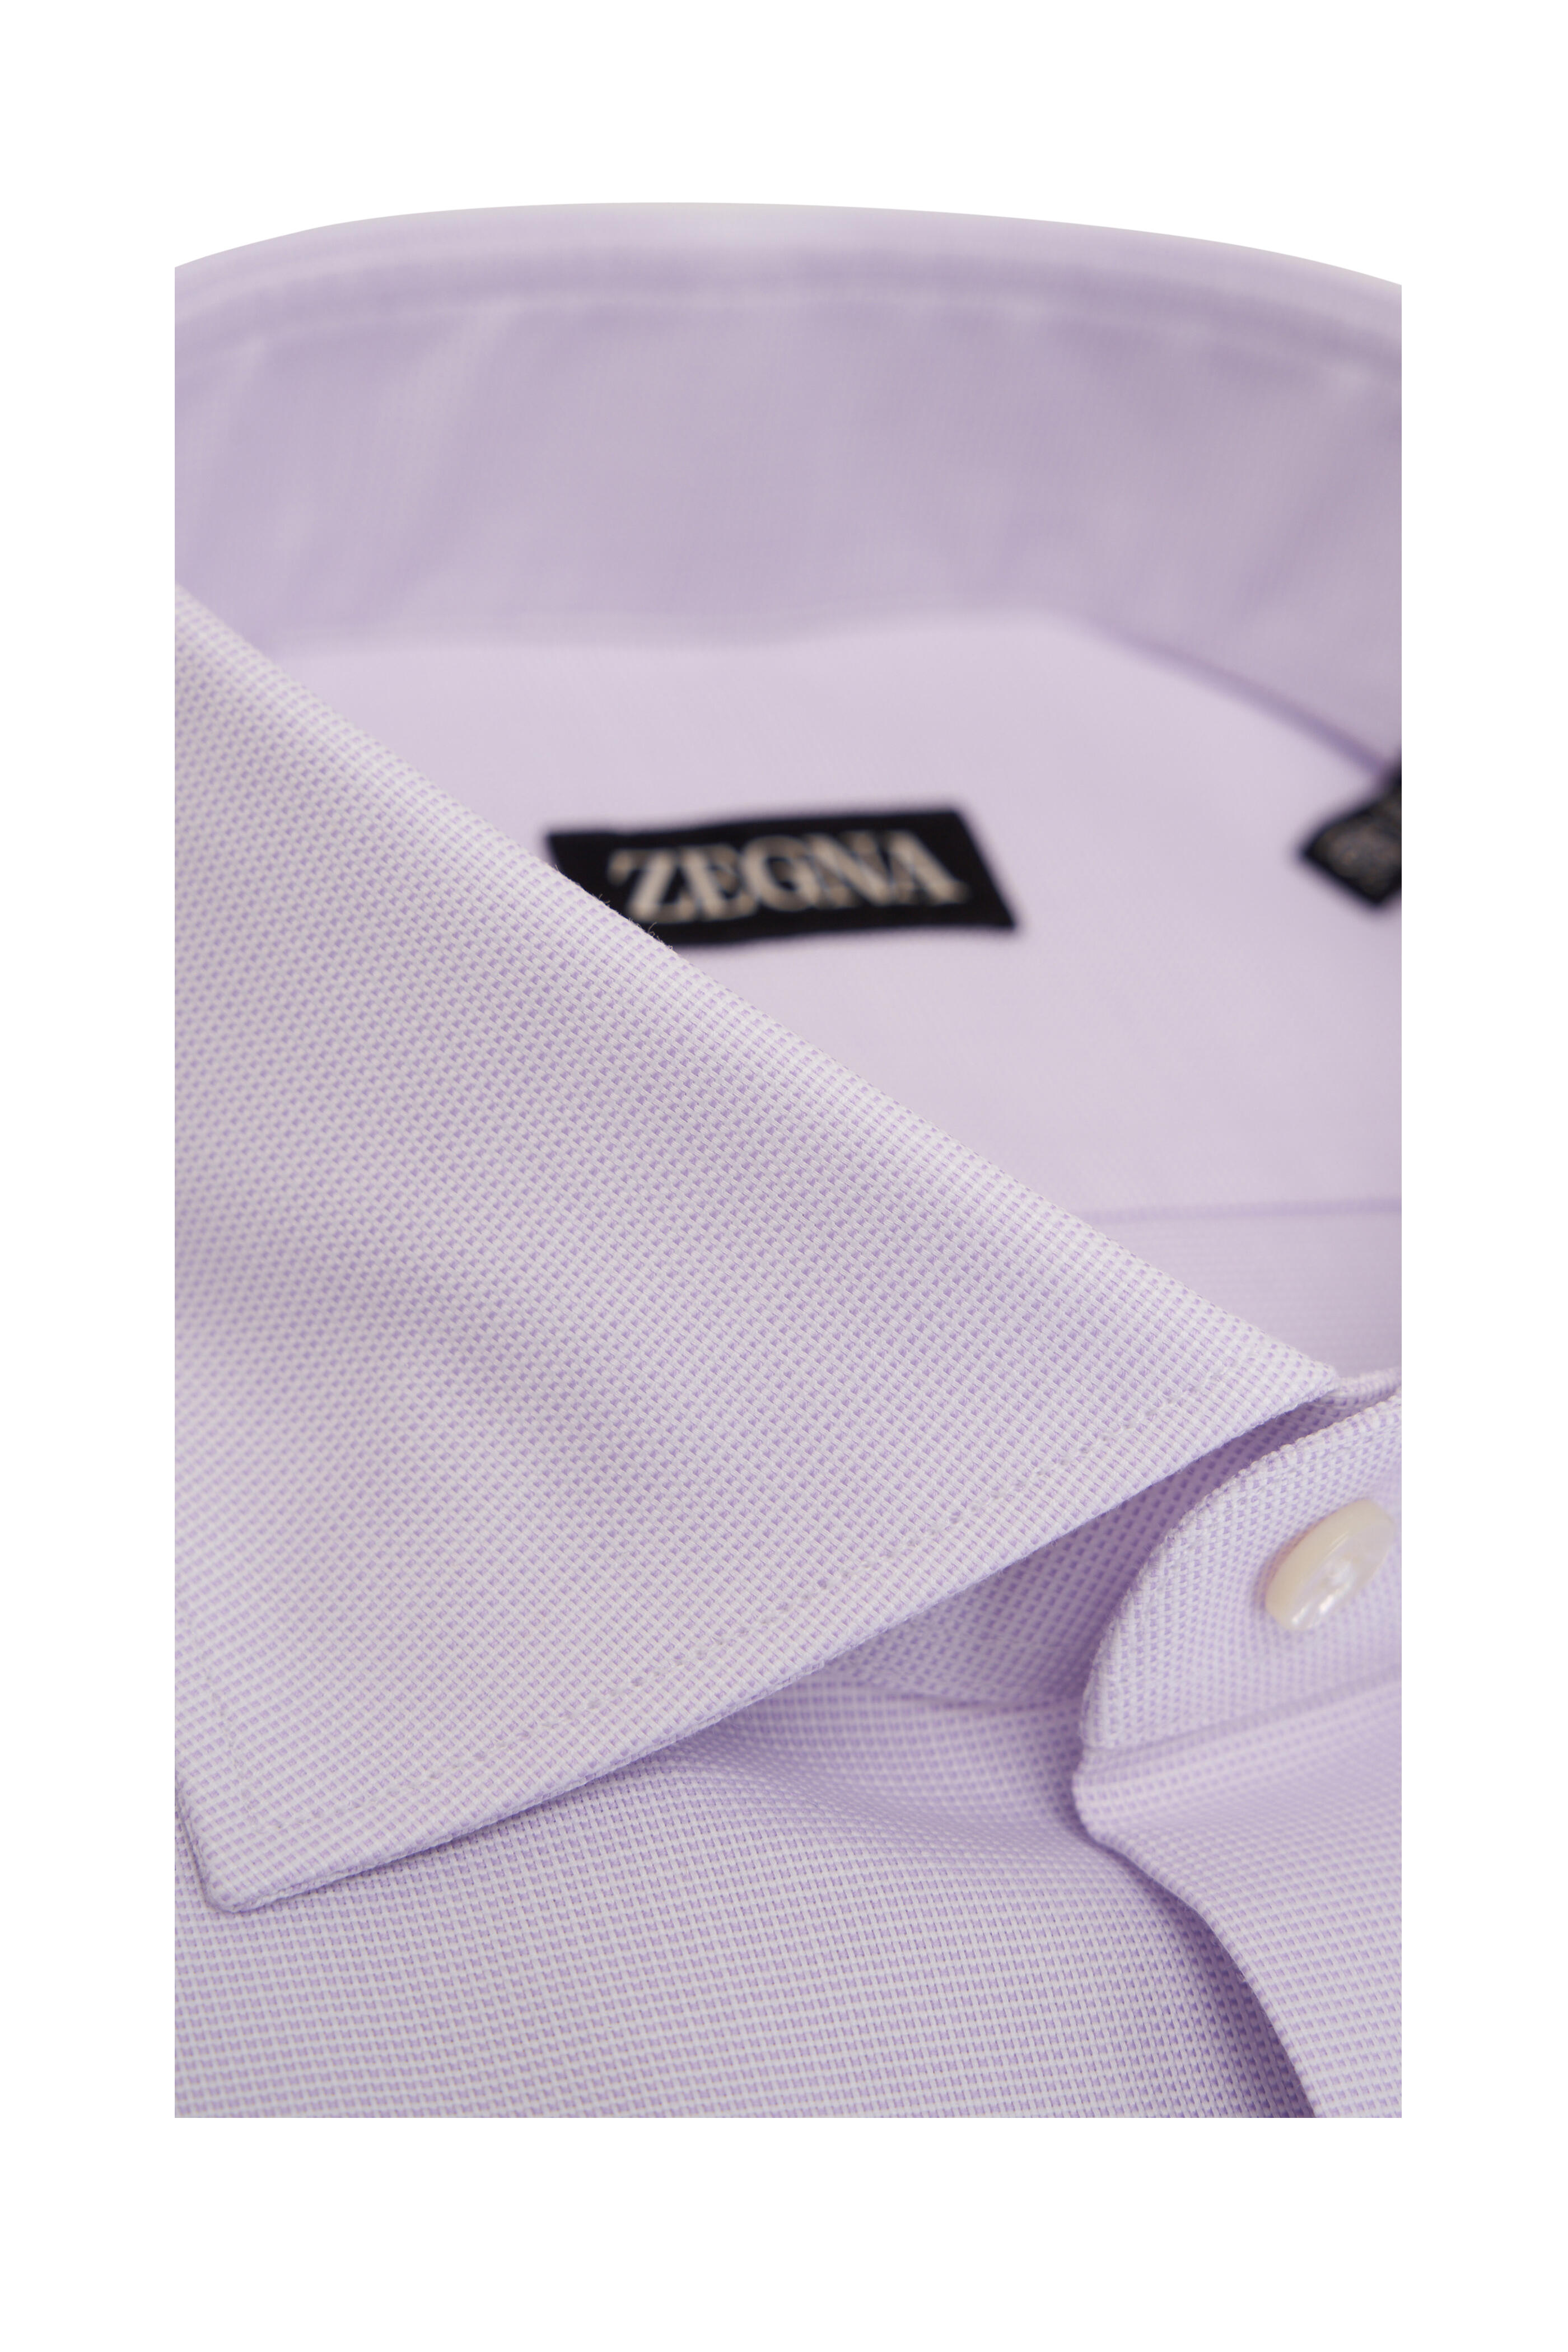 Zegna - Lavender Textured Cotton Dress Shirt | Mitchell Stores